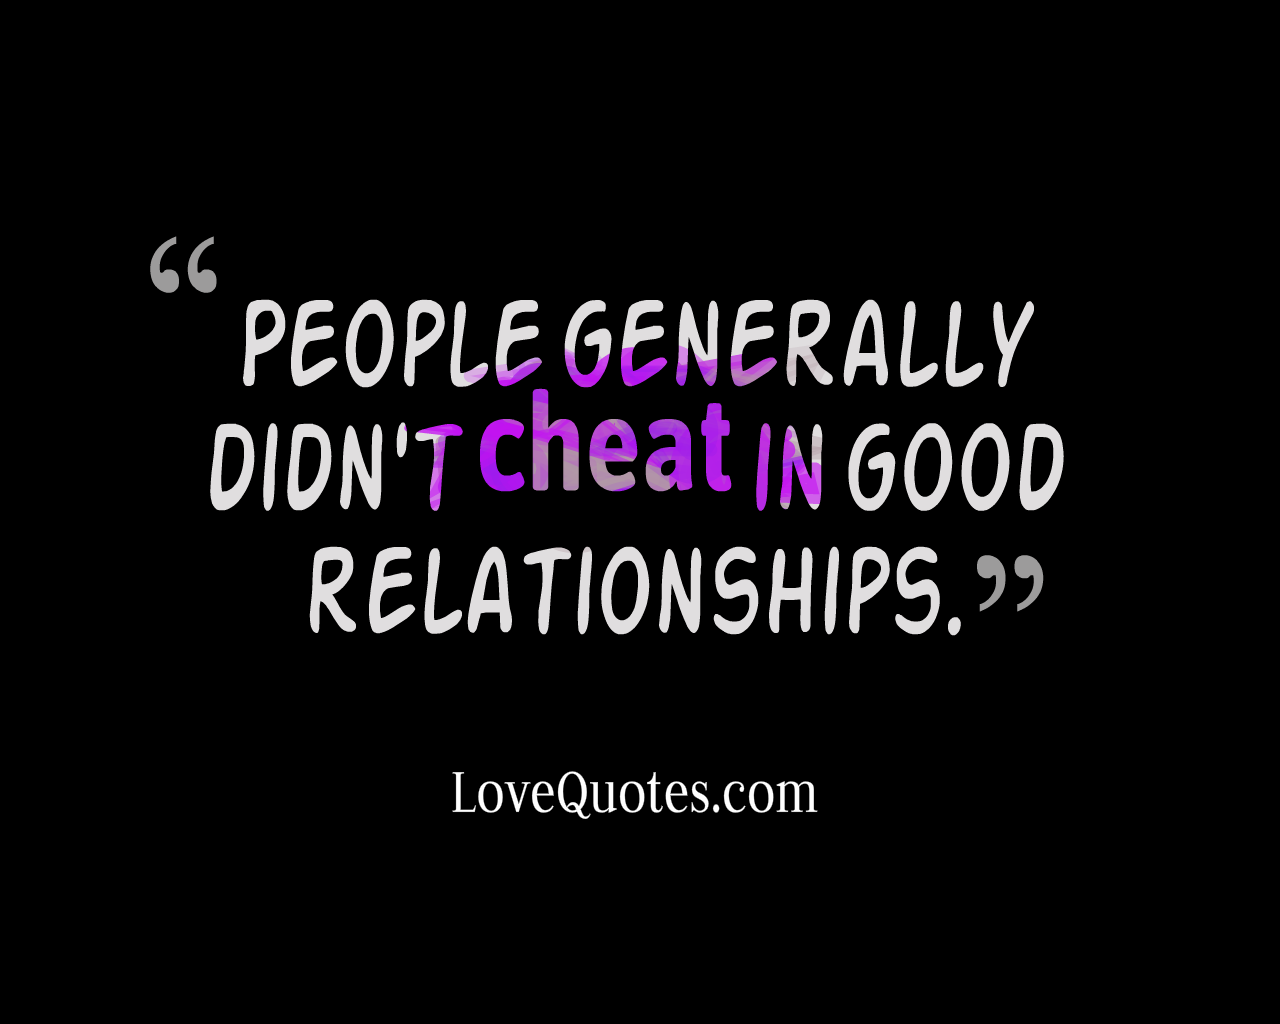 Good Relationships